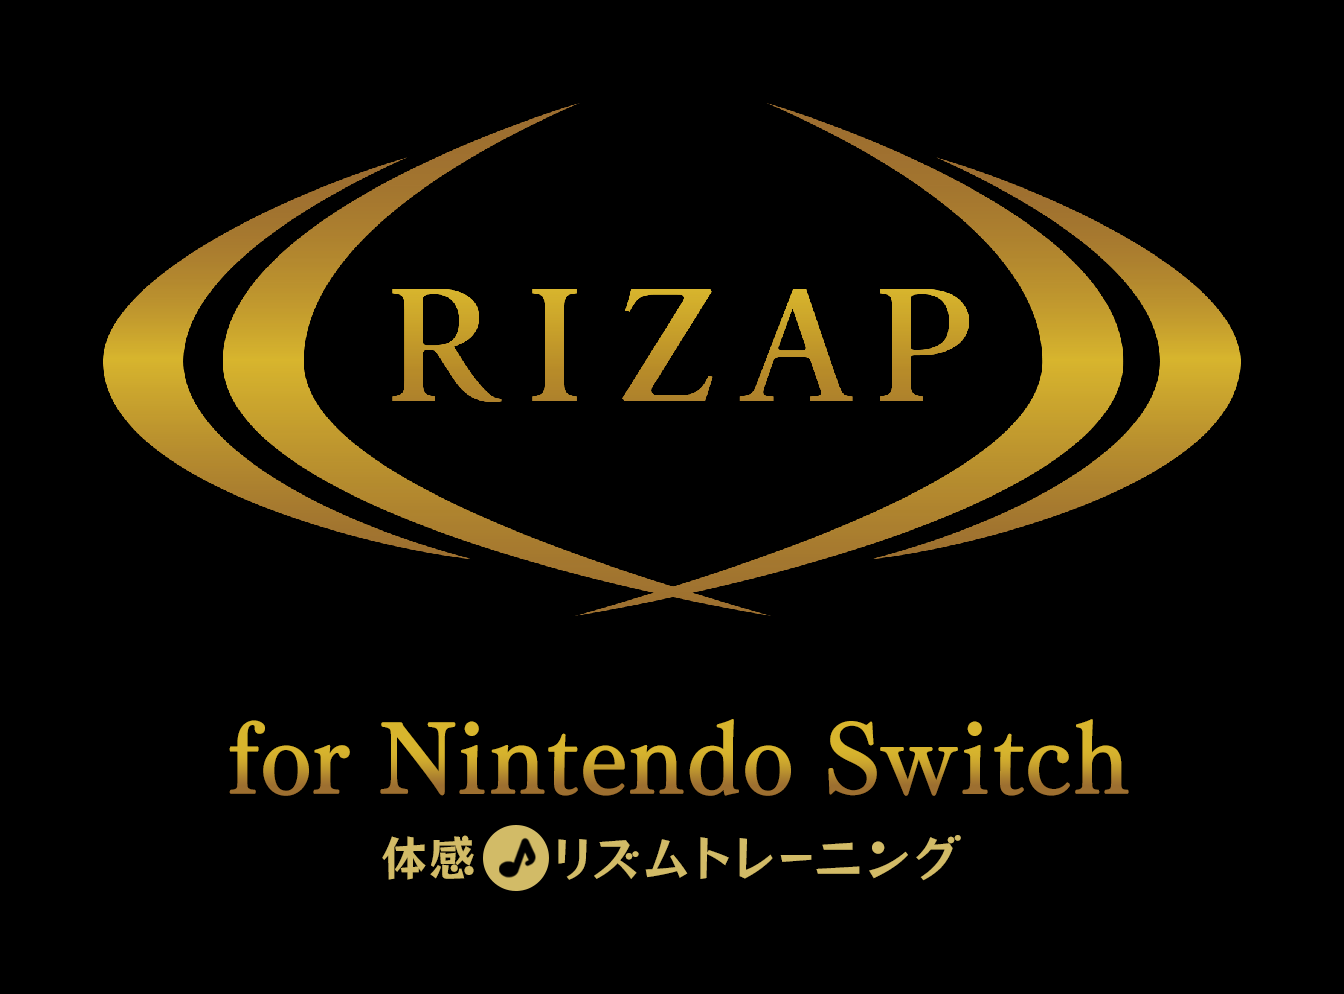 RIZAPがNintendo Switchに！
『RIZAP for Nintendo Switch ～体感♪リズムトレーニング～』
が6月27日(木)に発売開始！